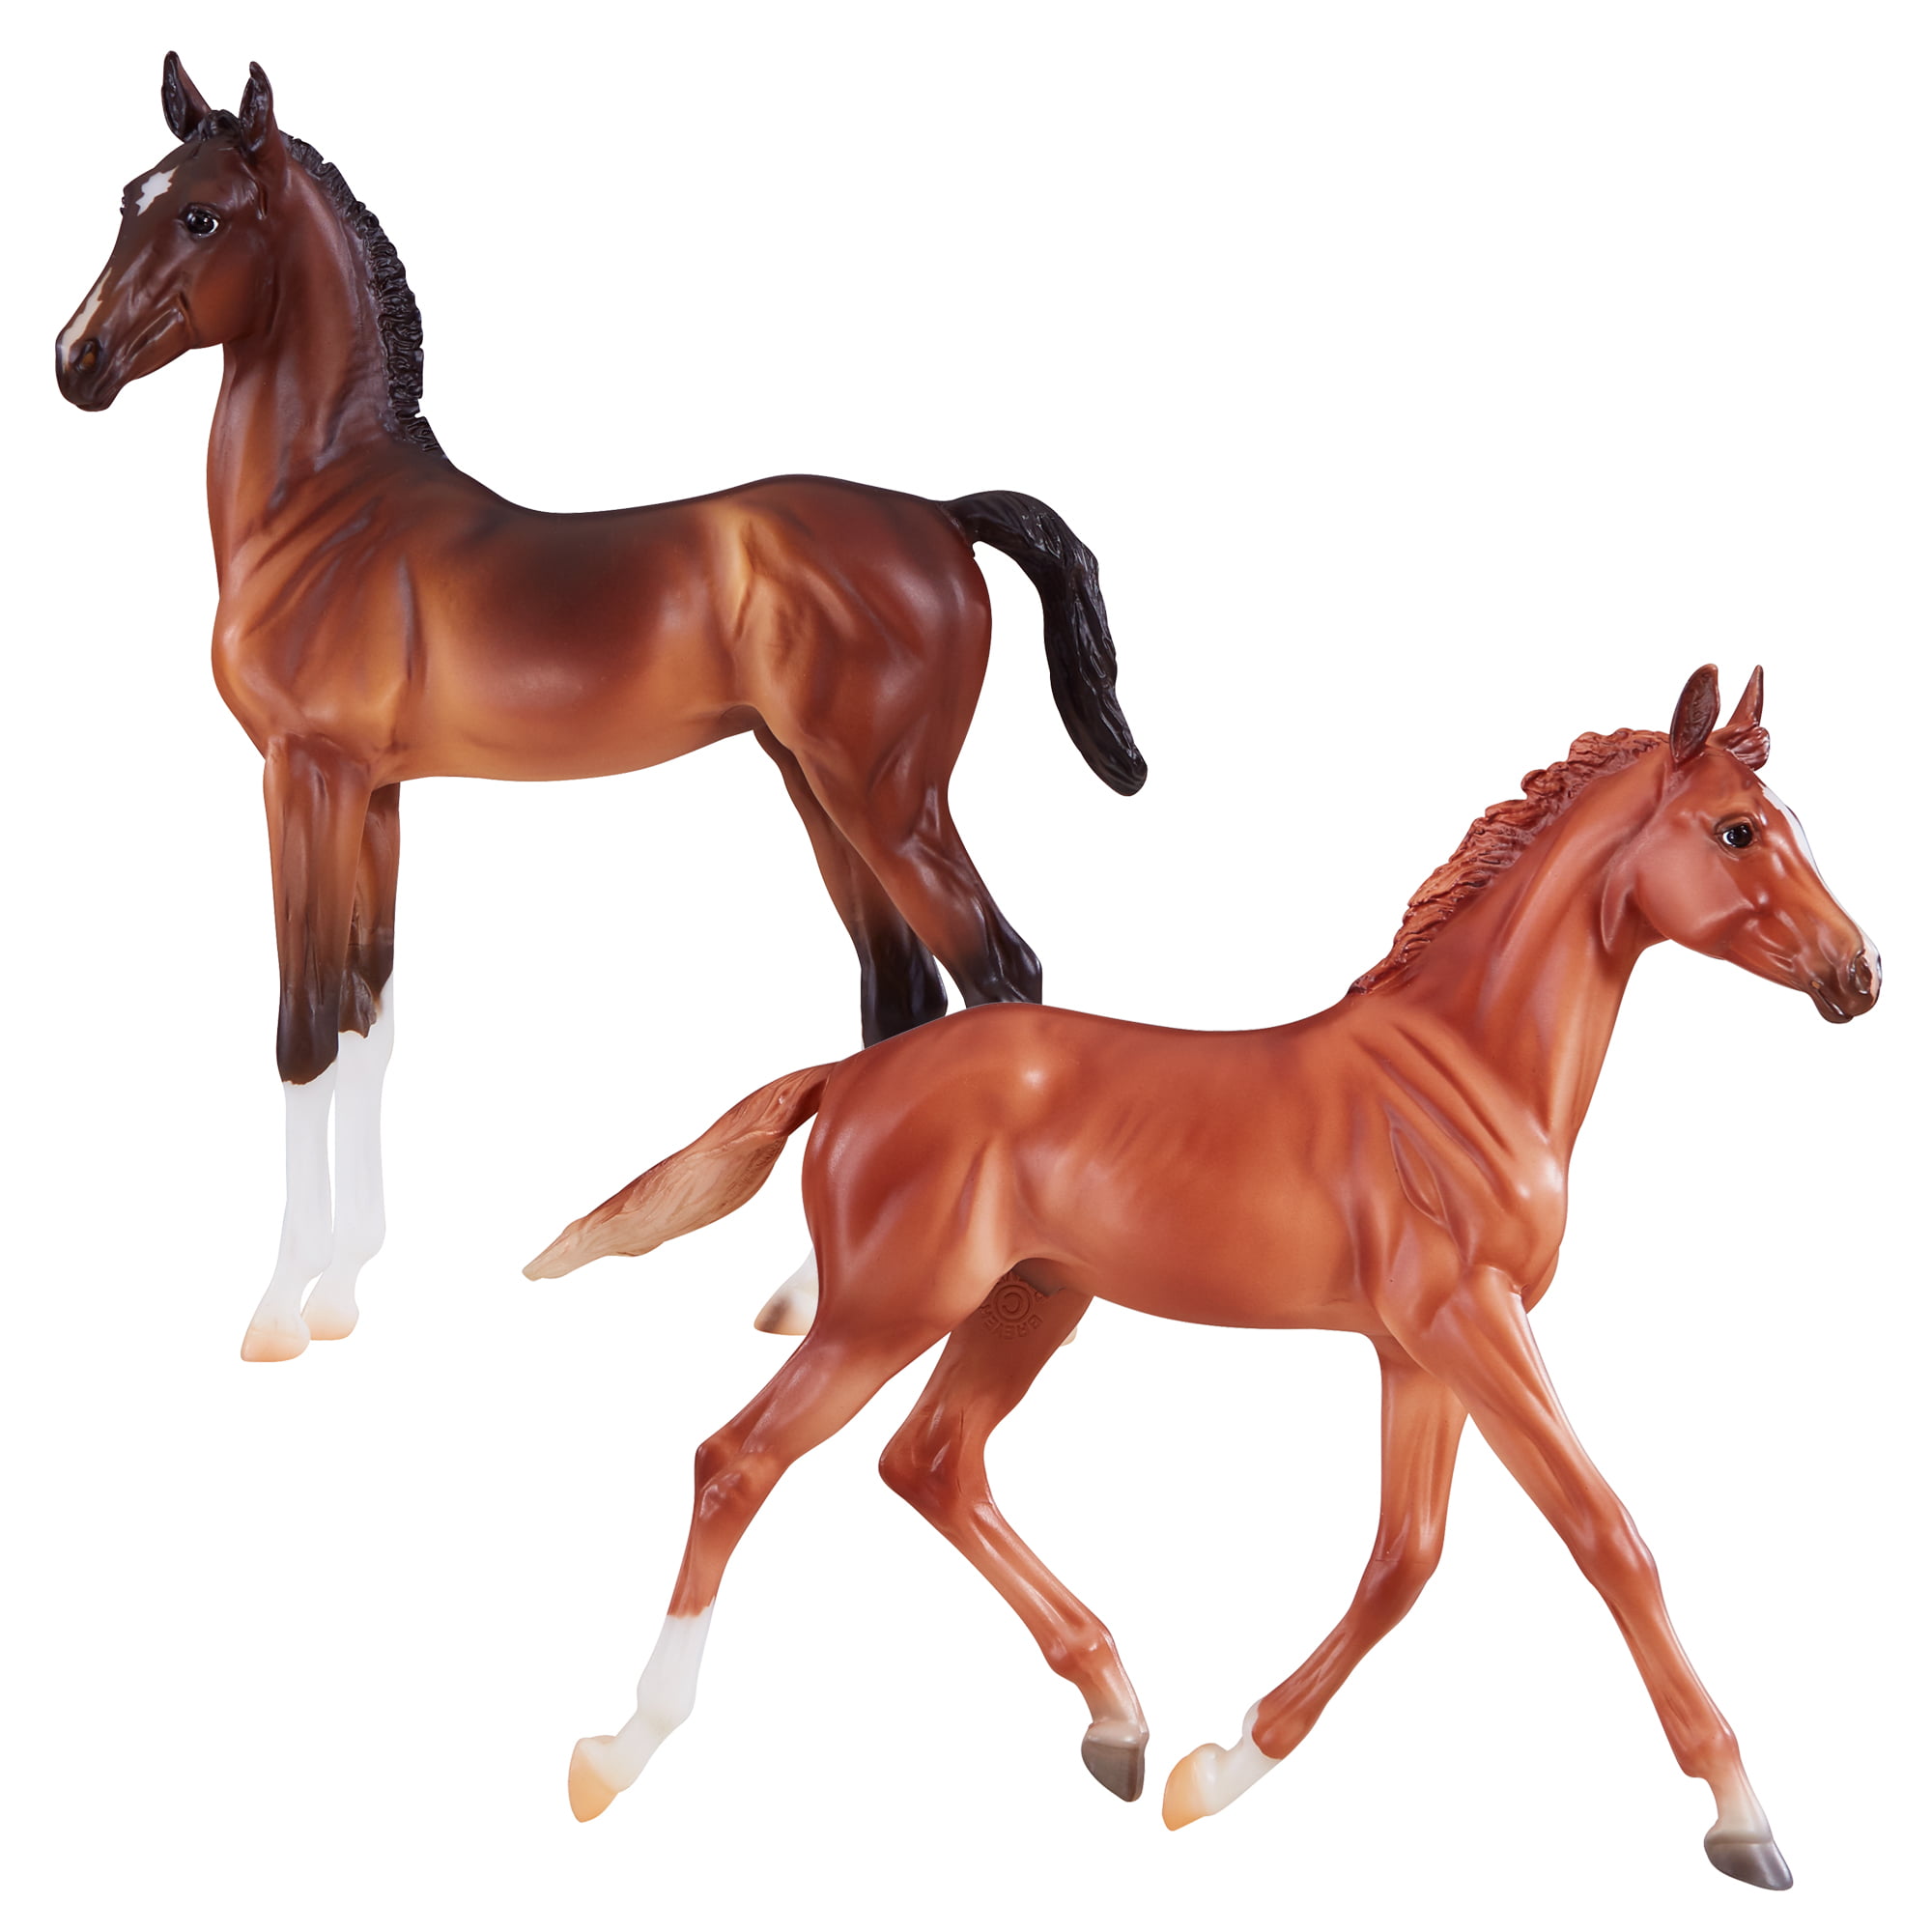 toy horses at walmart